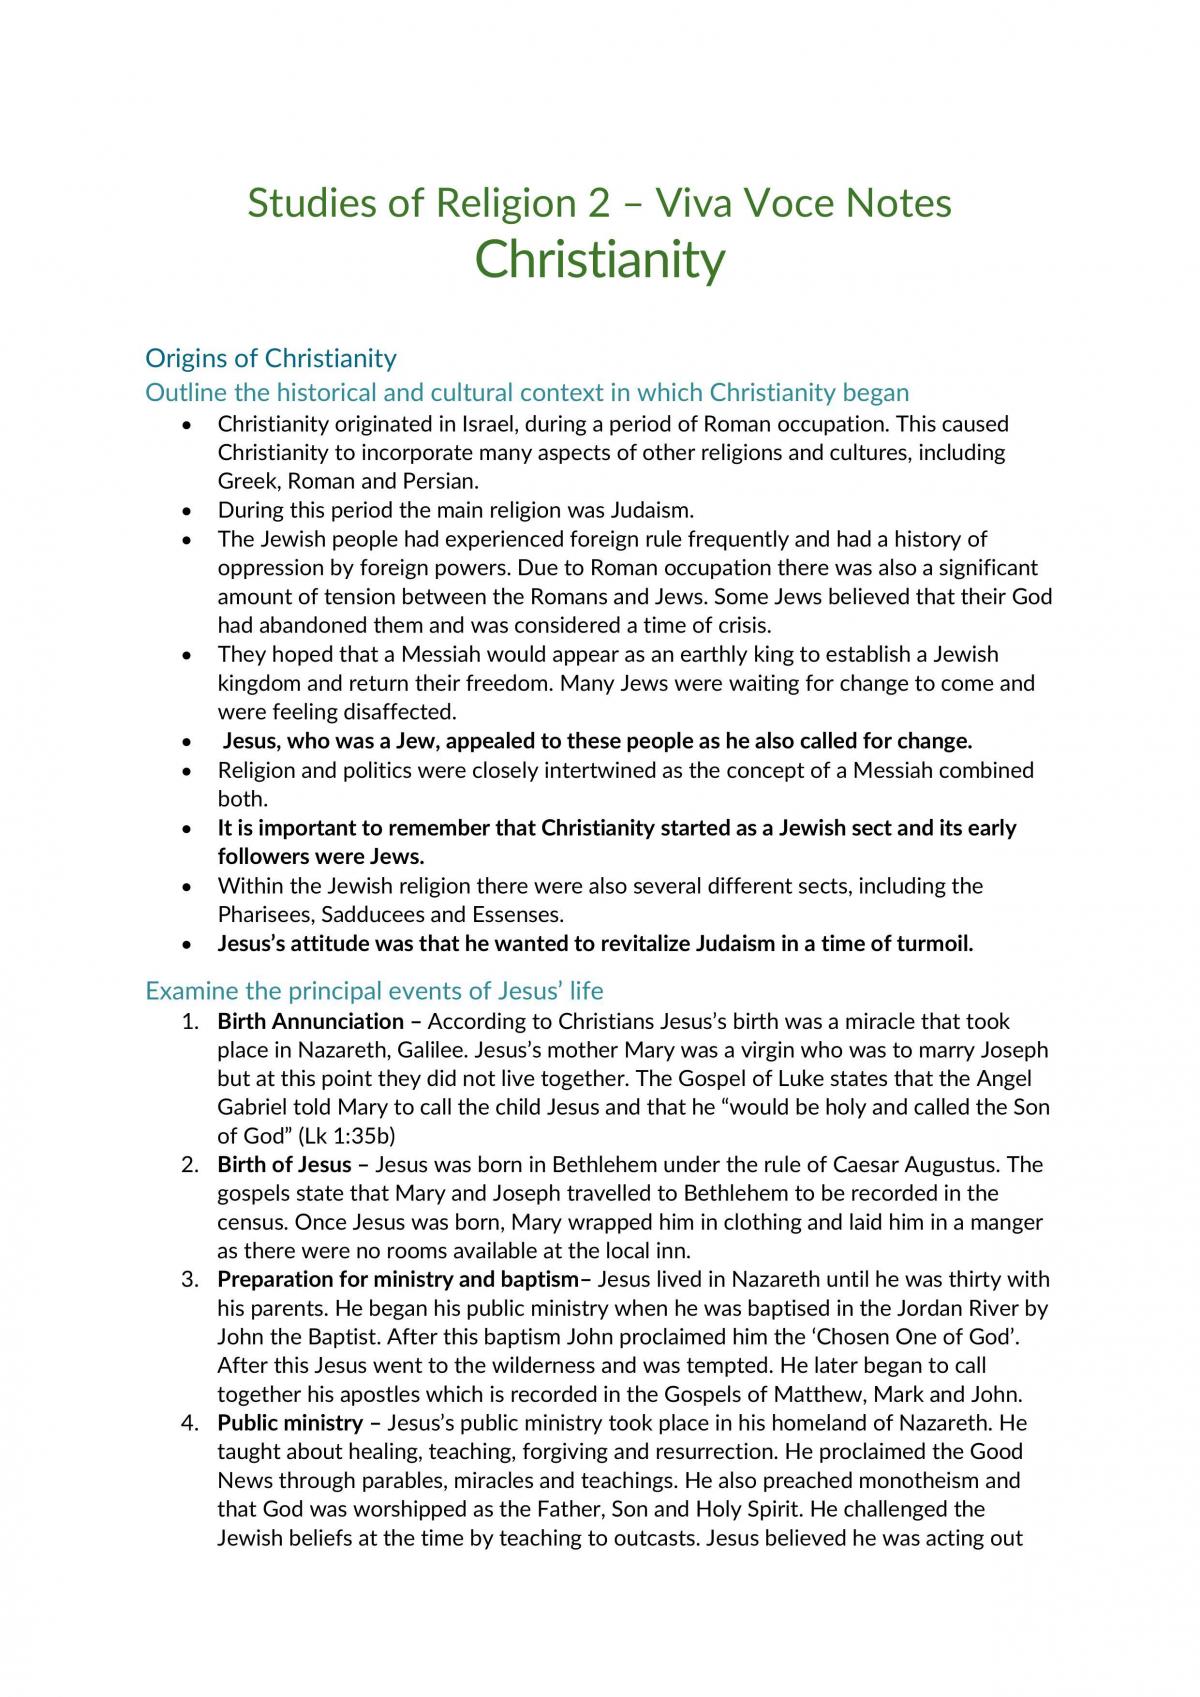 sor 2 christianity essay